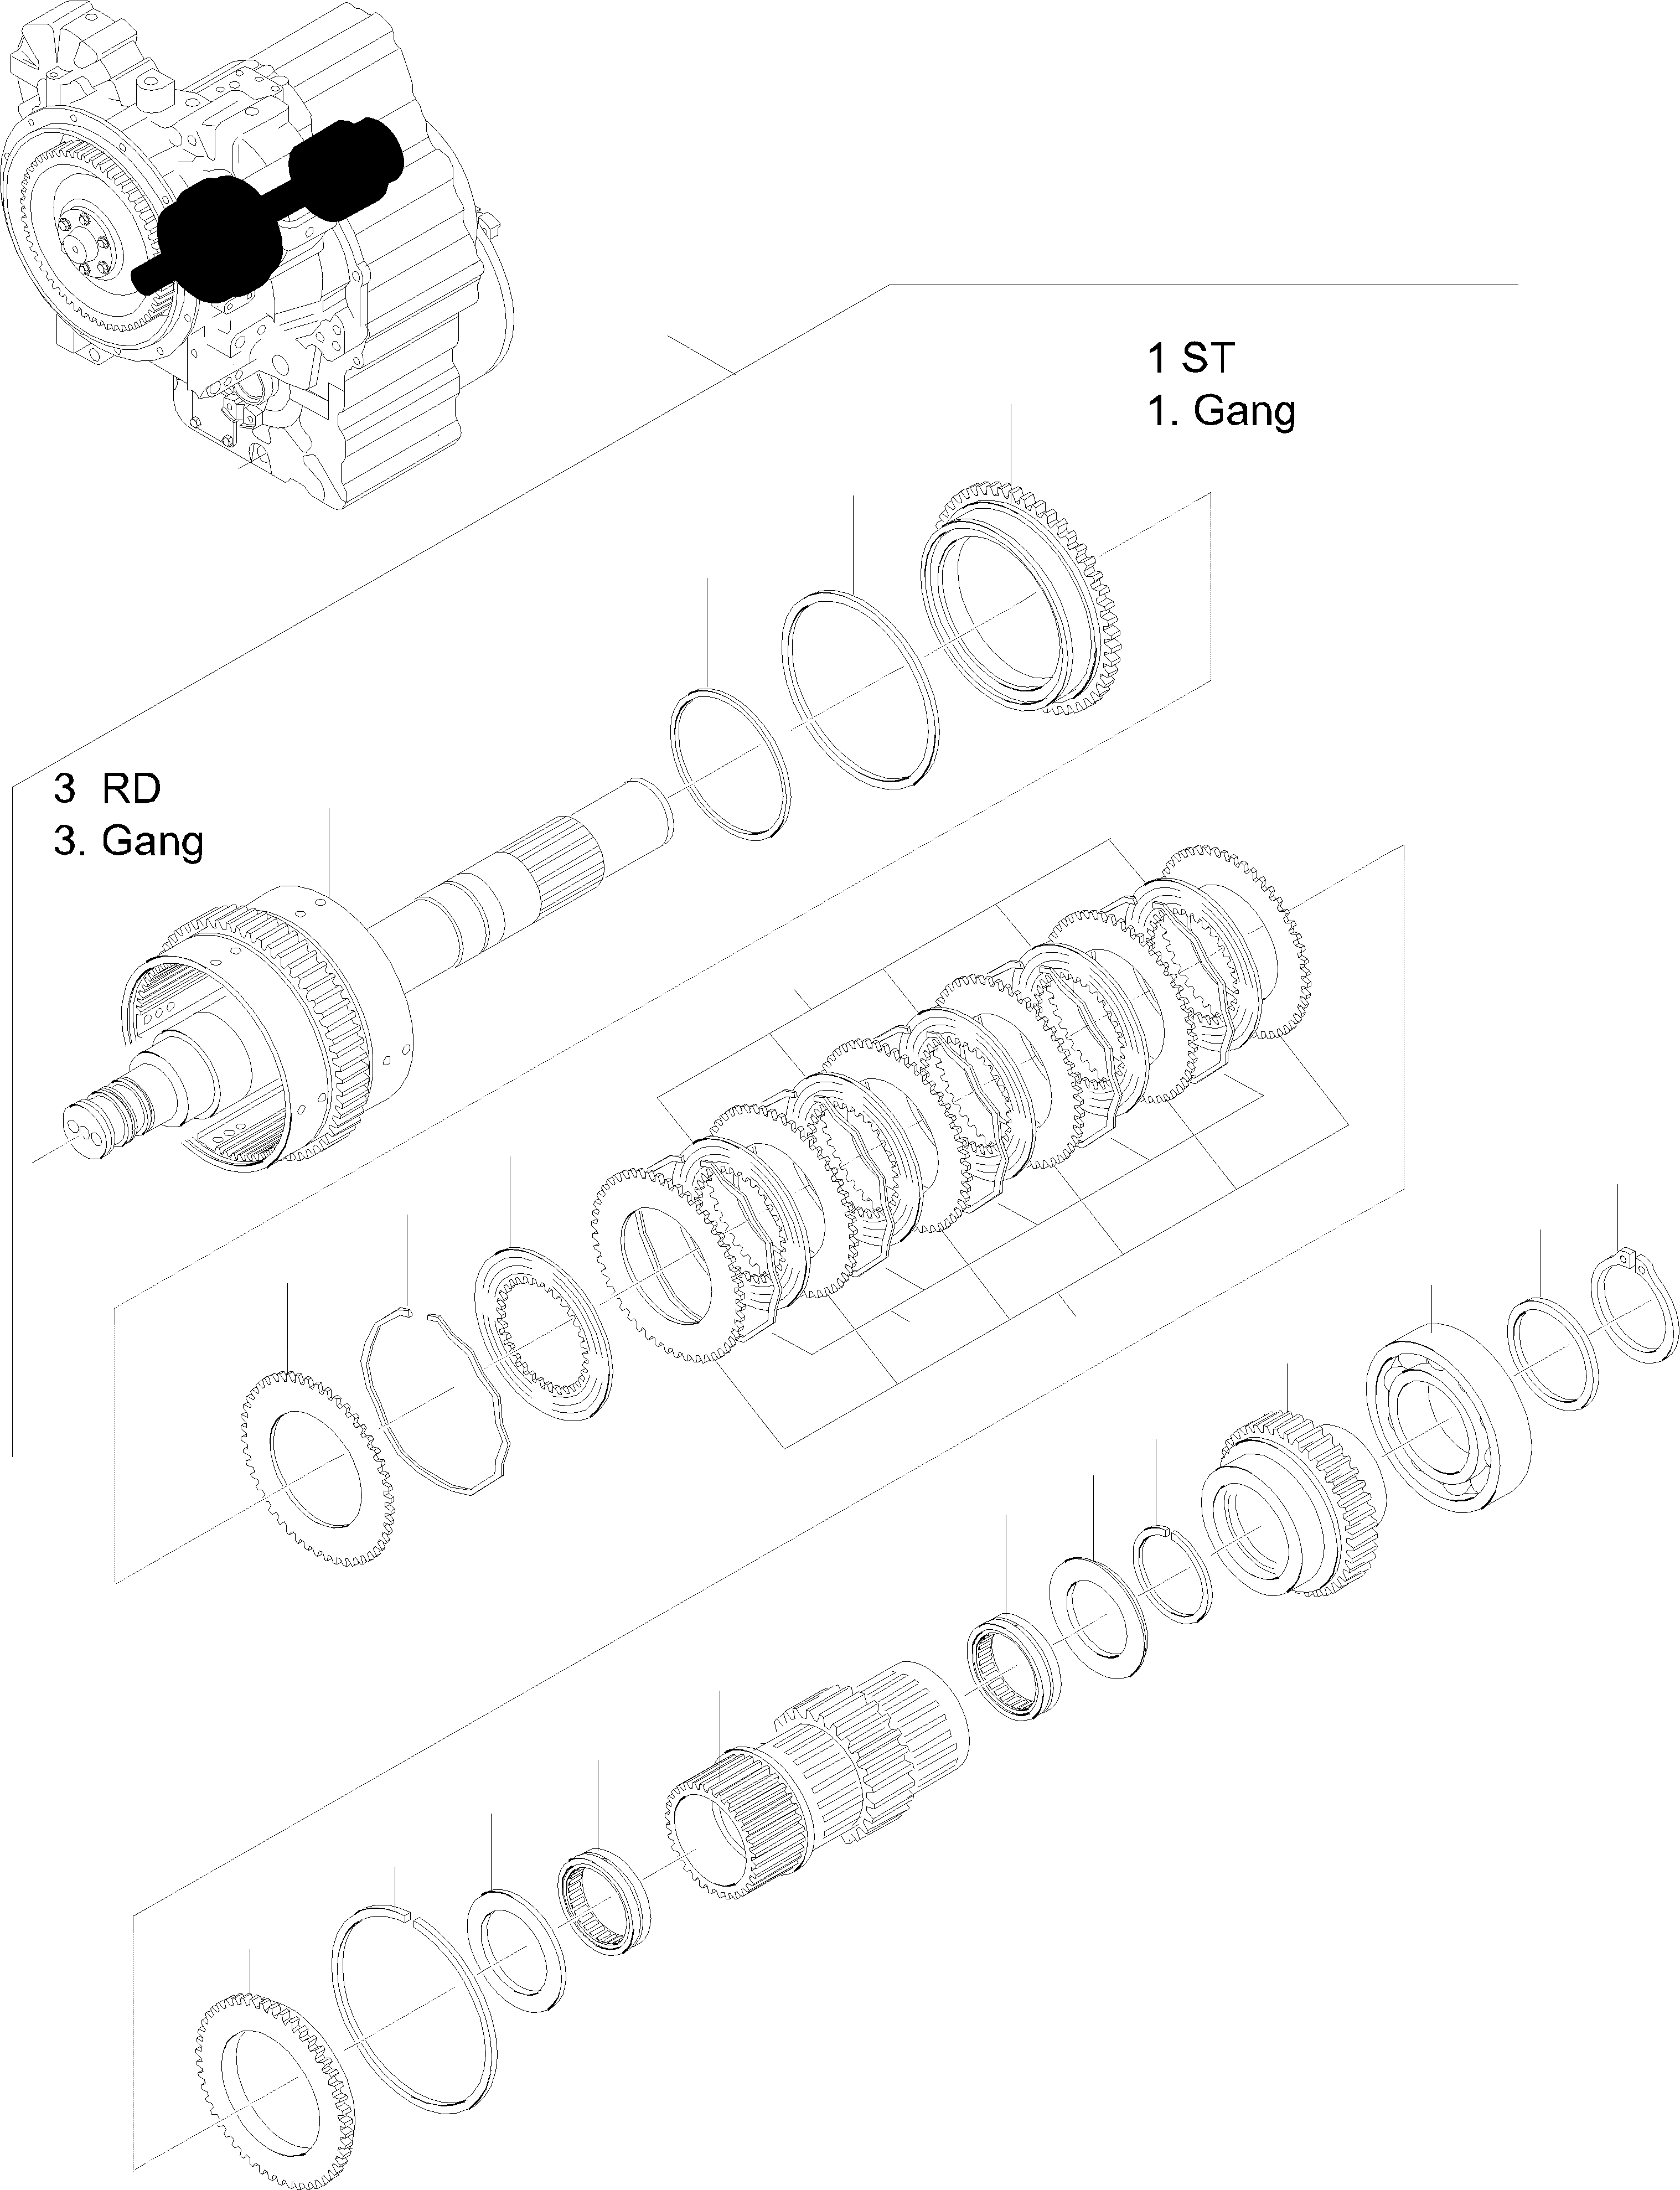 Схема запчастей Komatsu WA380-3 - ПРИВОДS И ВАЛS, МУФТА I ТРАНСМИССИЯ, КРЕСТОВИНА